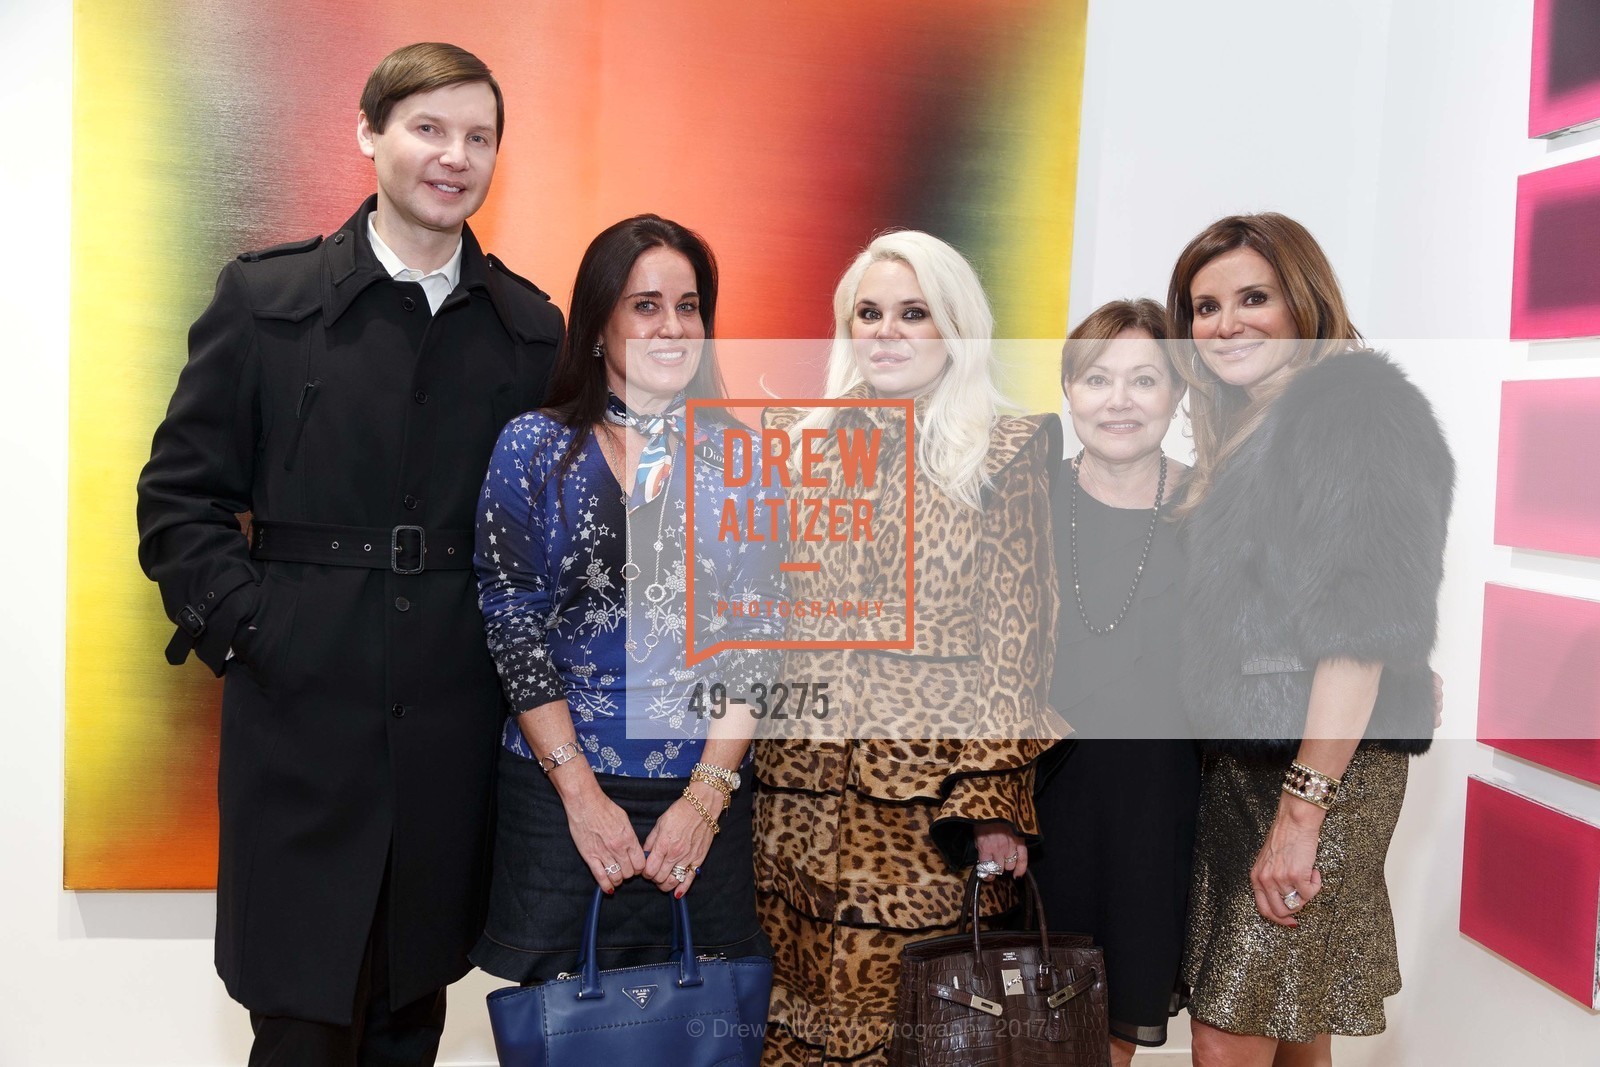 Ivan Bekichev, Natalia Urrutia, Rada Katz, Vicky Morel, Claudia Ross, Photo #49-3275